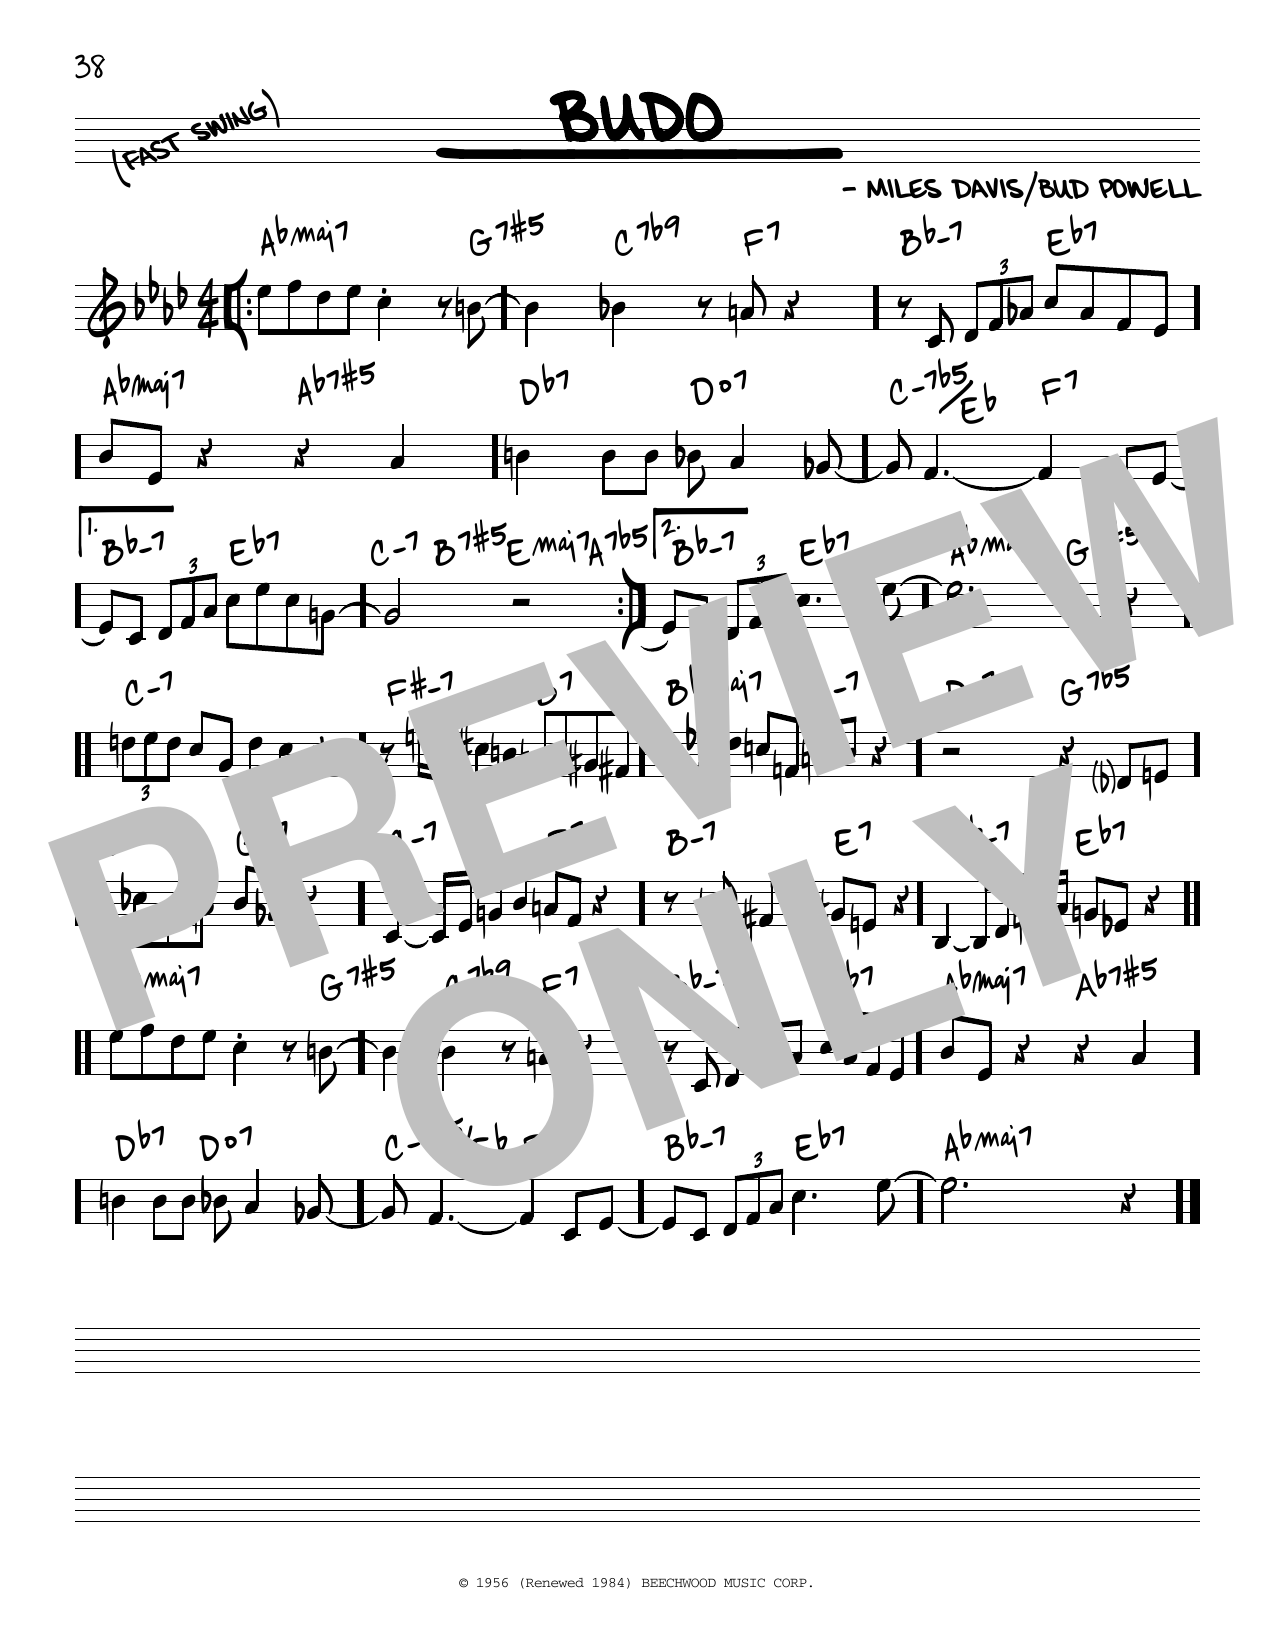 Miles Davis Budo Sheet Music Notes & Chords for Trumpet Transcription - Download or Print PDF